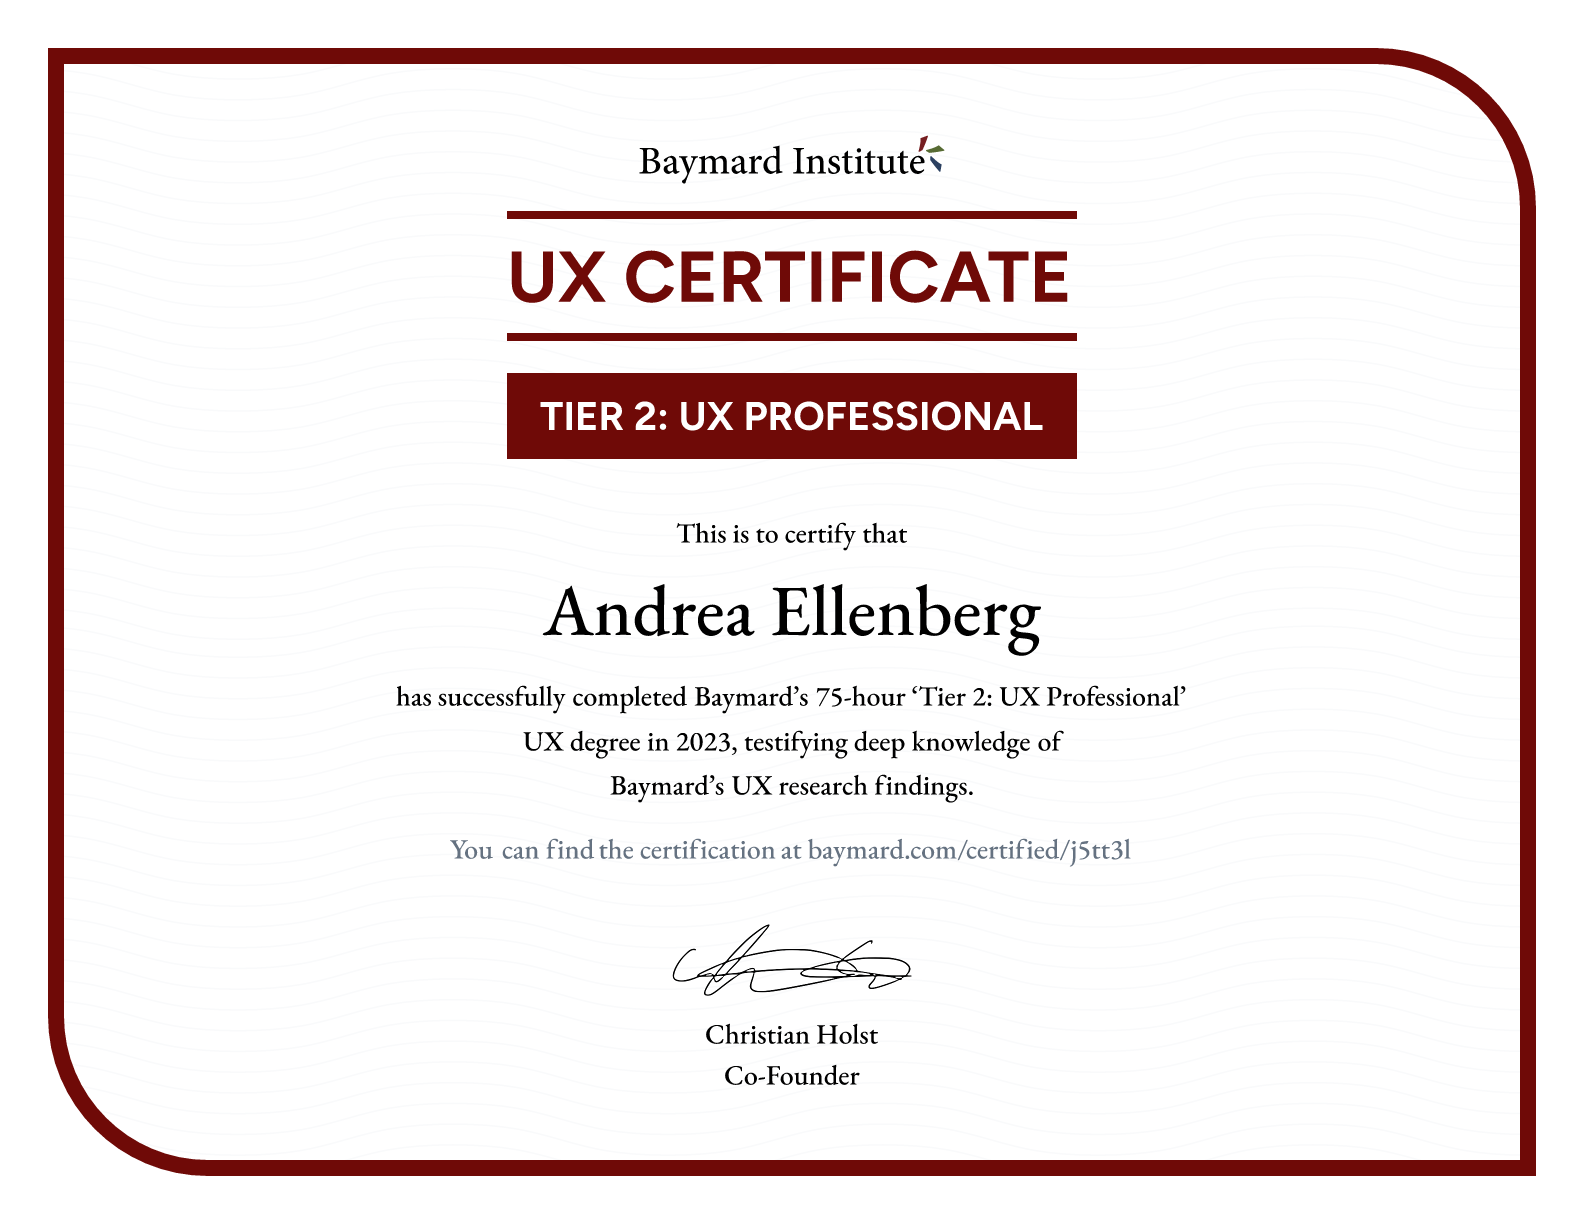 Andrea Ellenberg’s certificate